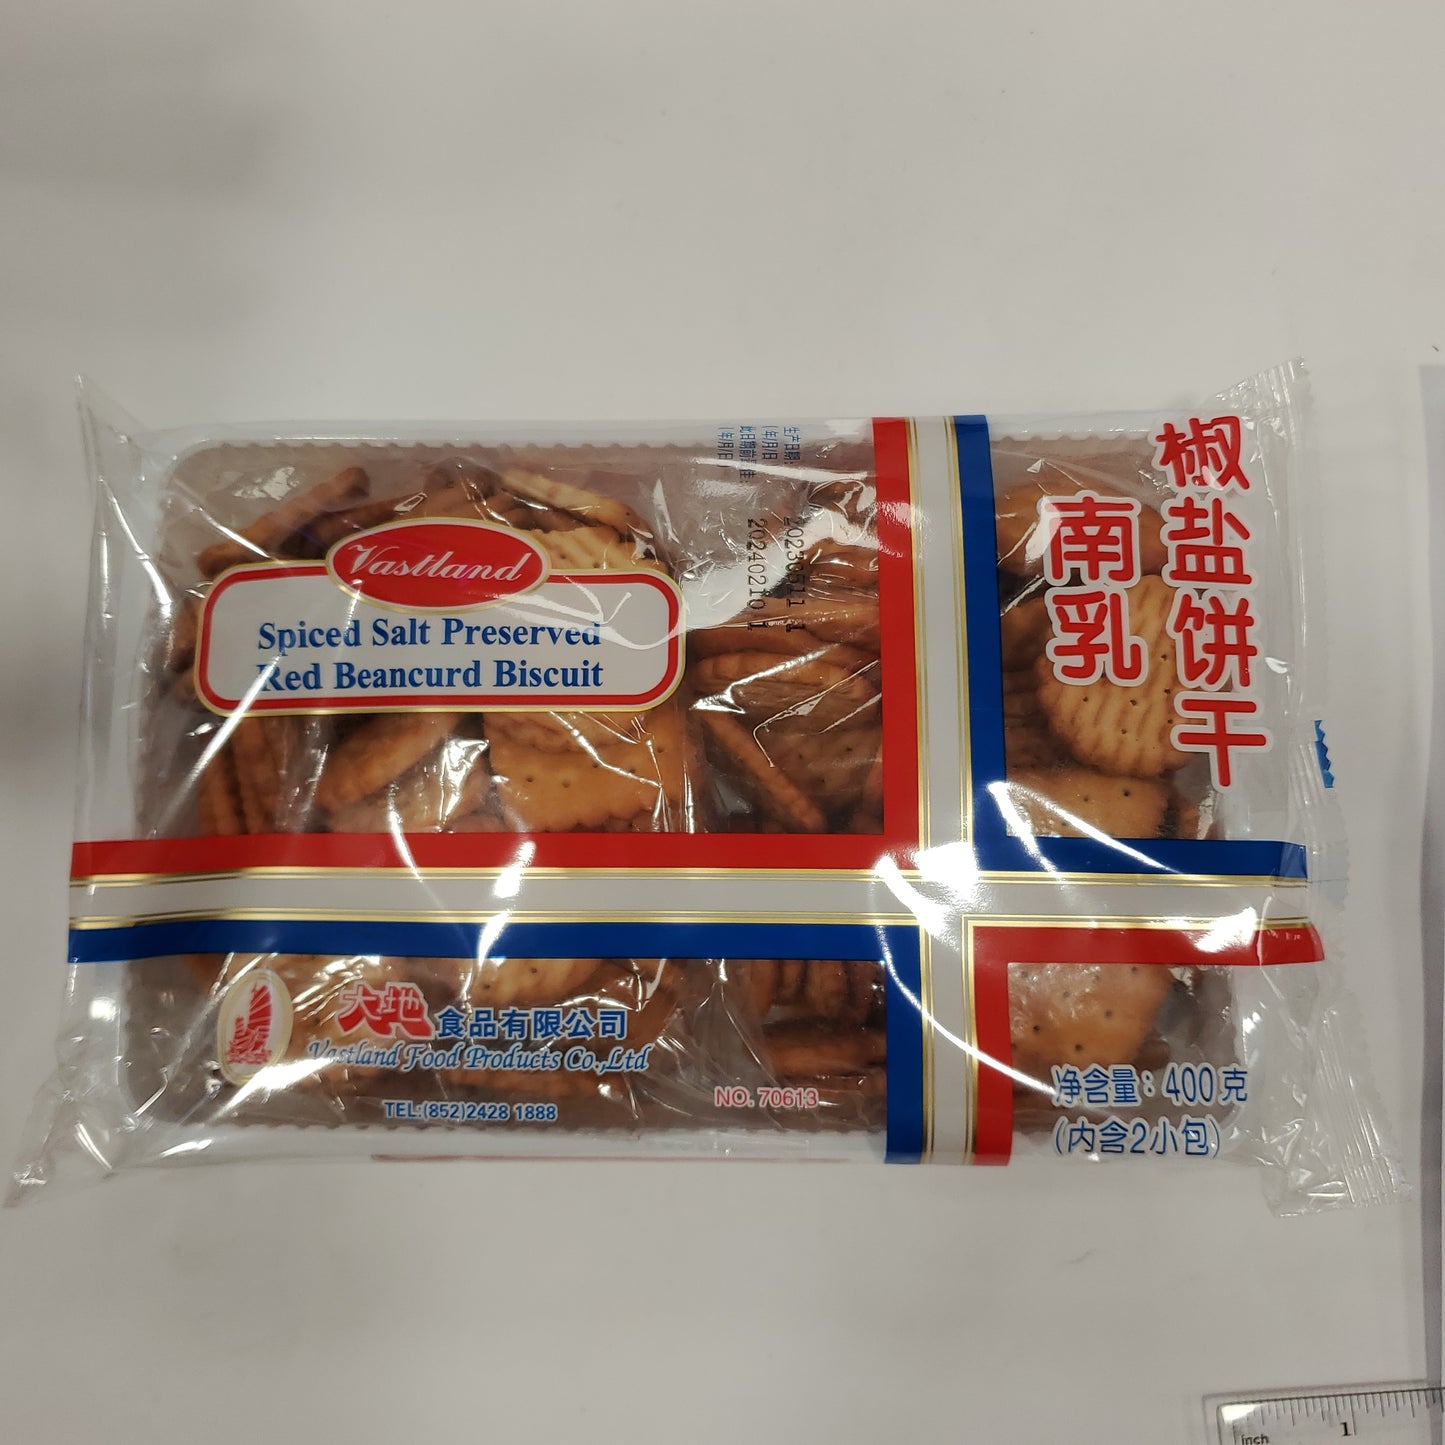 Dadi Spuced Salt Preserved Red Beancurd Biscuit 400g